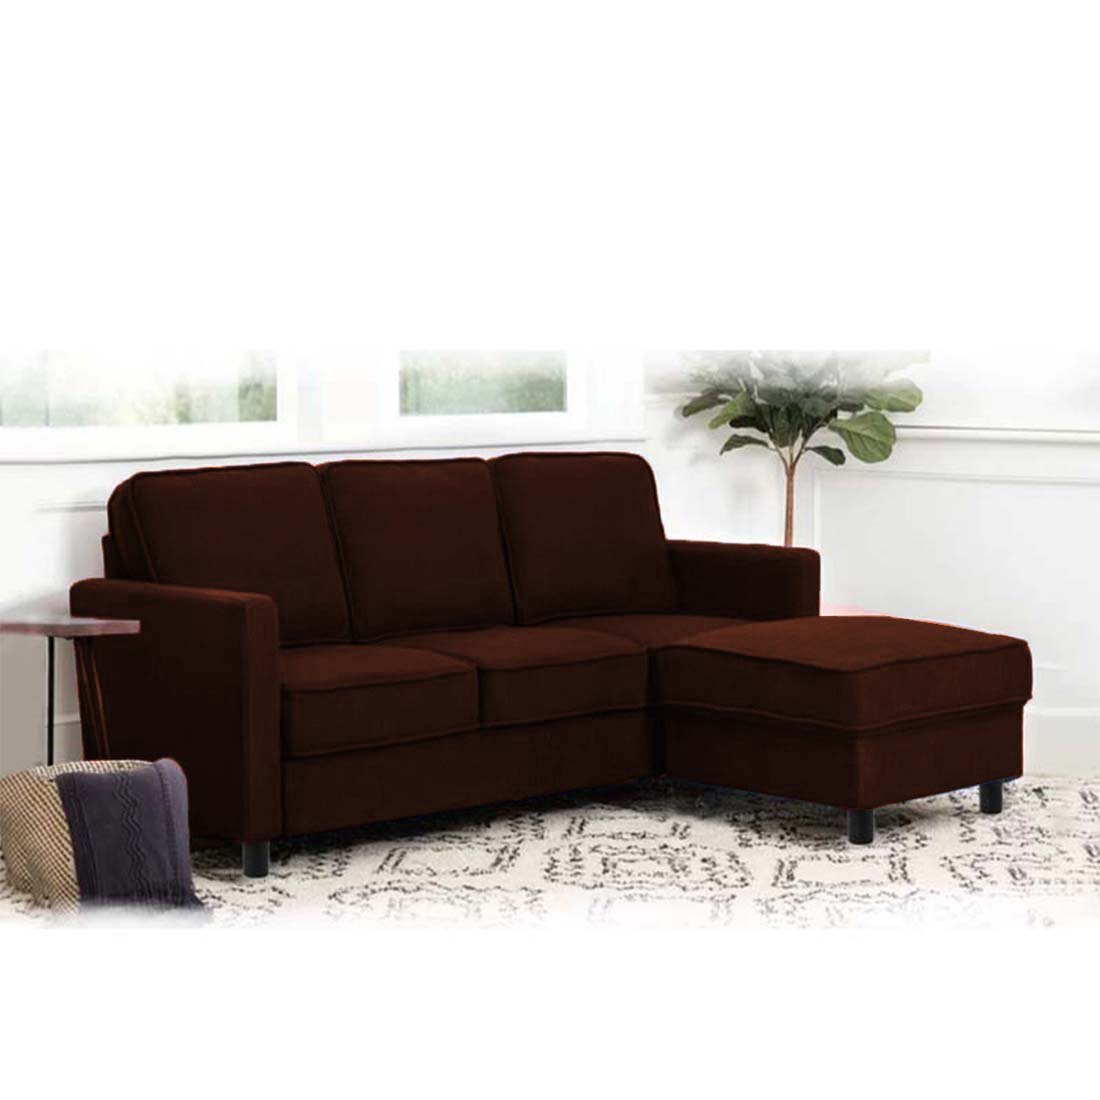 Torque India Federica 3 Seater Fabric Sofa With Ottoman For Living Room - TorqueIndia